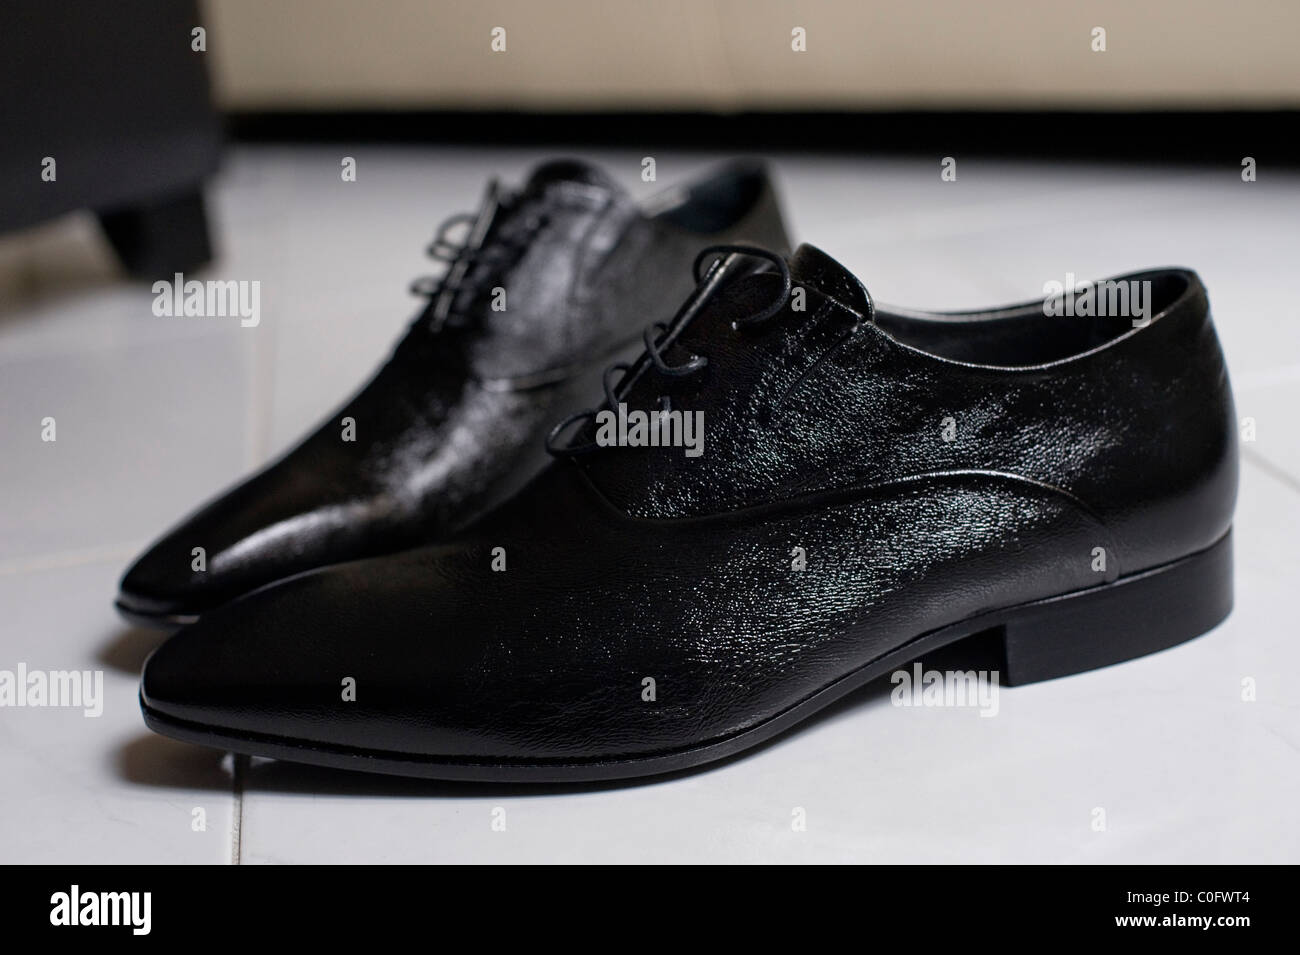 Nero lucido scarpe matrimonio Foto stock - Alamy